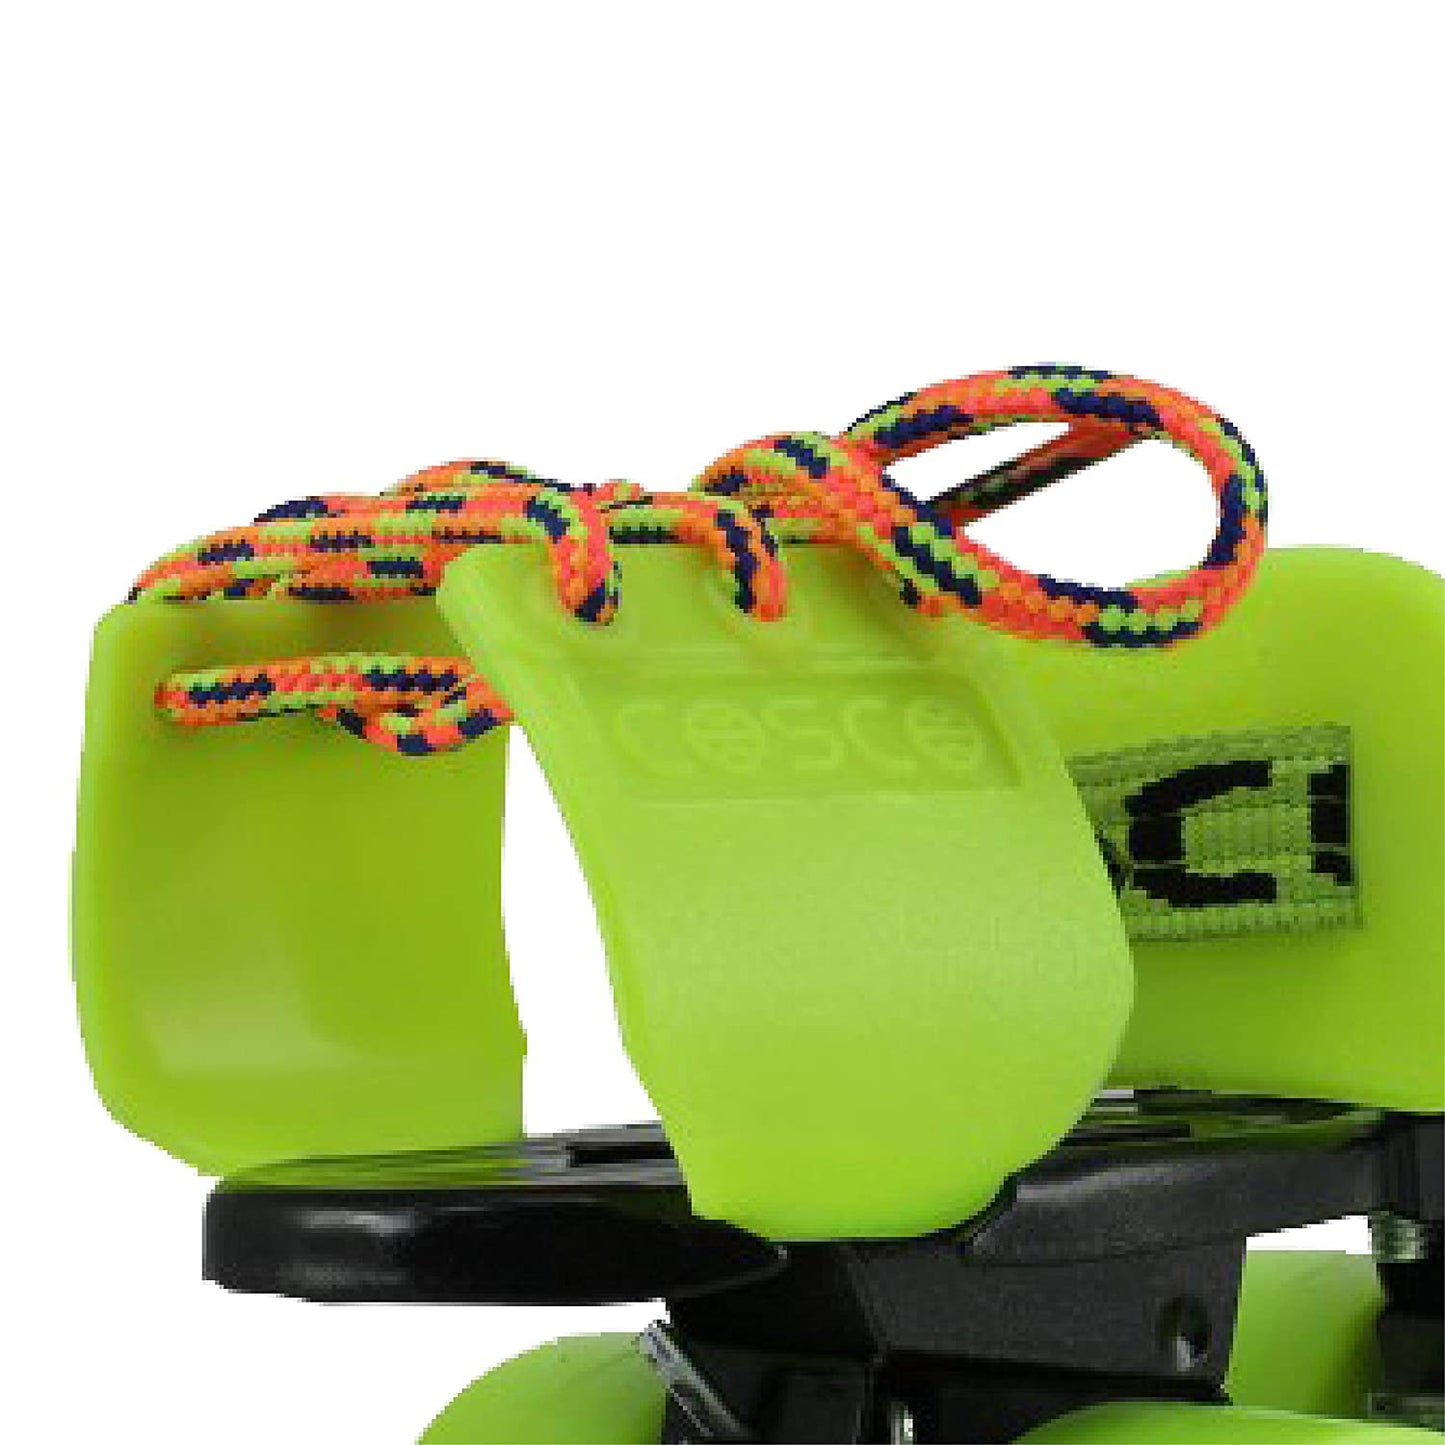 Cosco Zoomer Junior Roller Skate - Best Price online Prokicksports.com